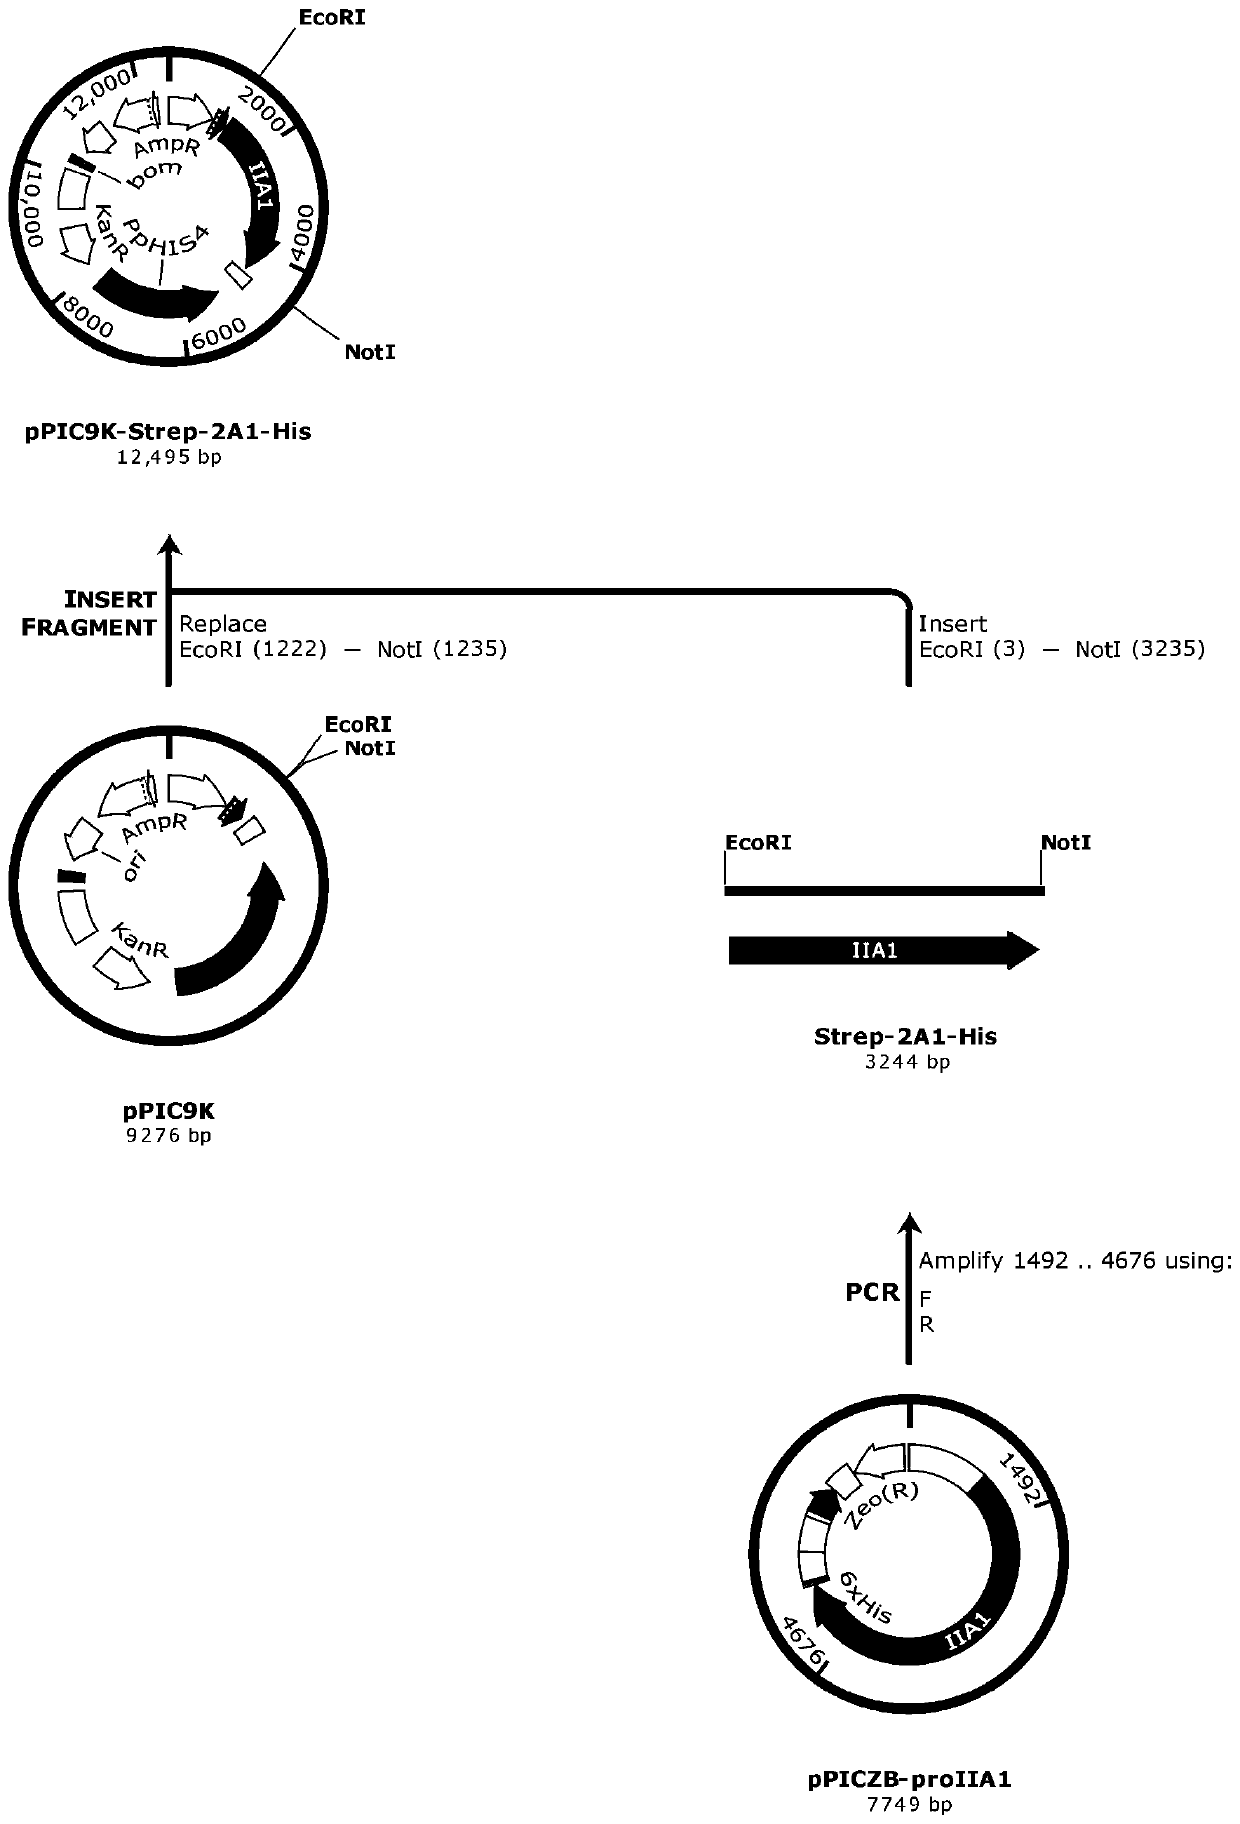 Method for producing recombinant human type II collagen single chain by Pichia pastoris